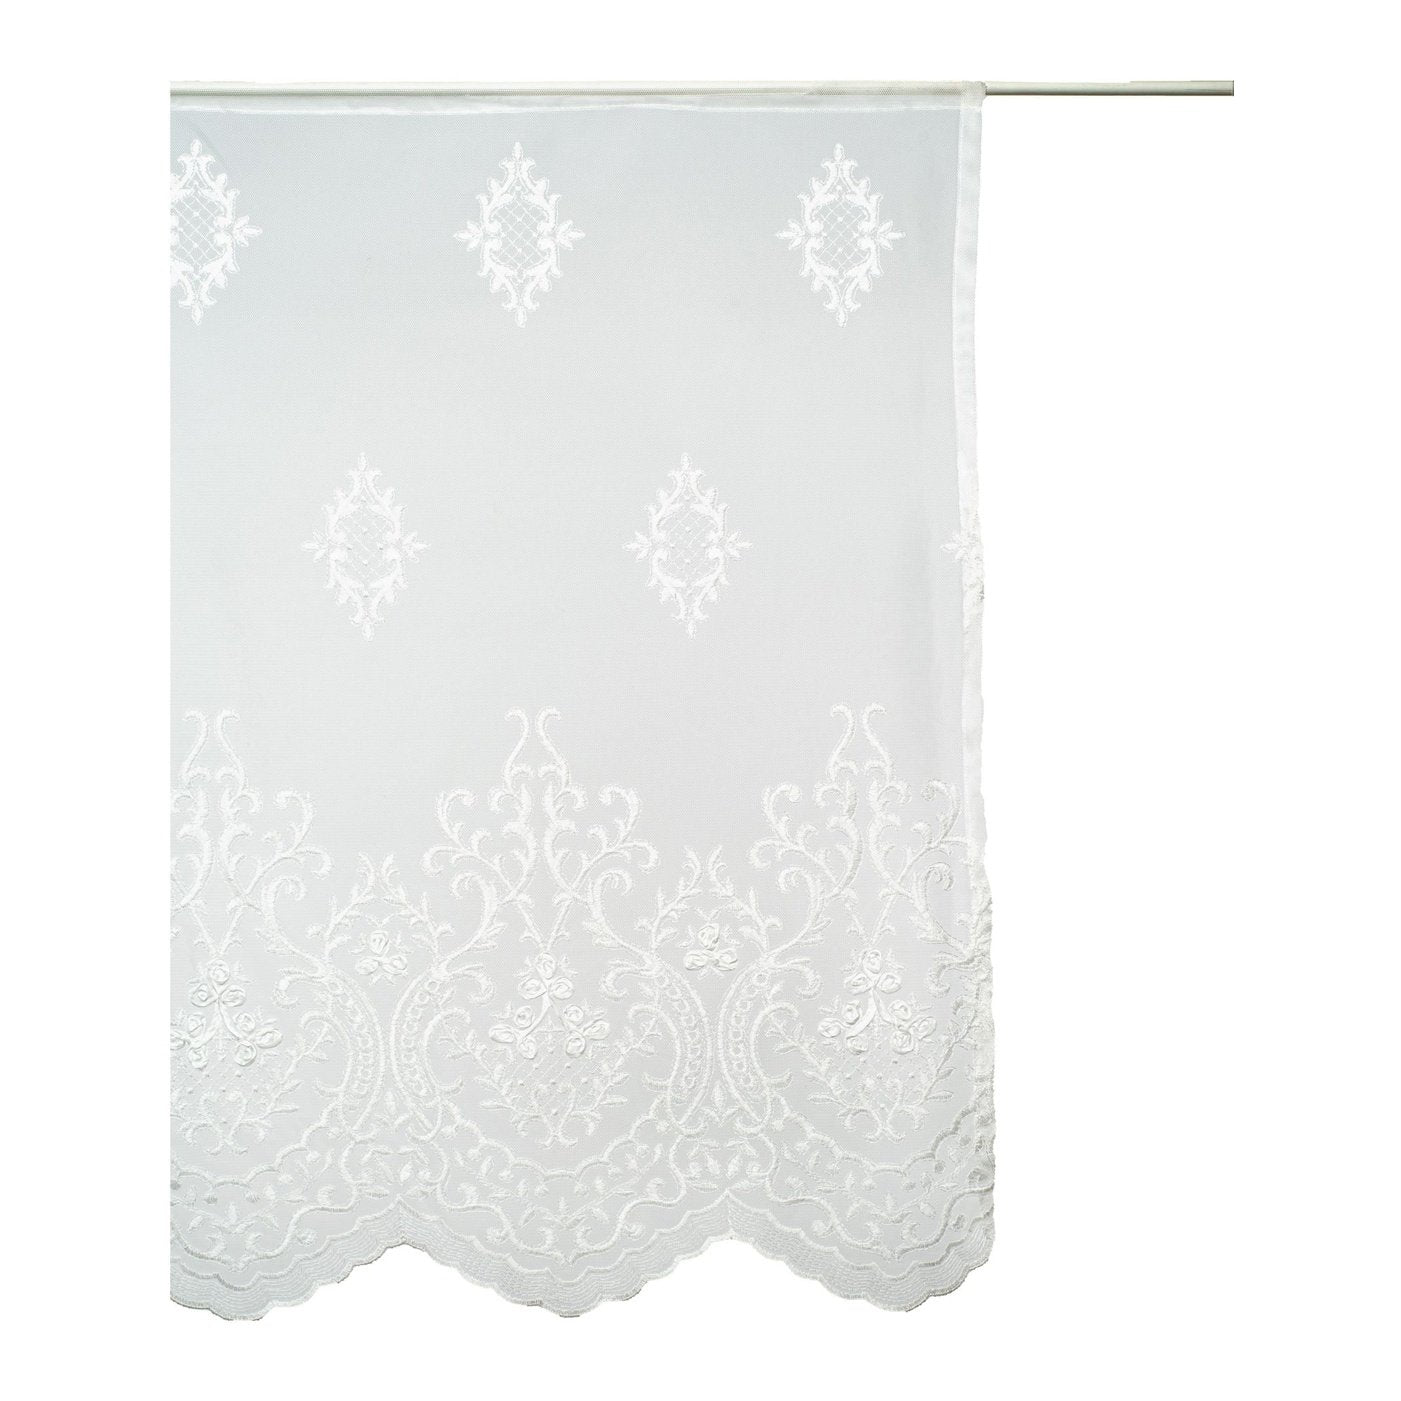 Exquisite off-white curtain with elegant scallop border.